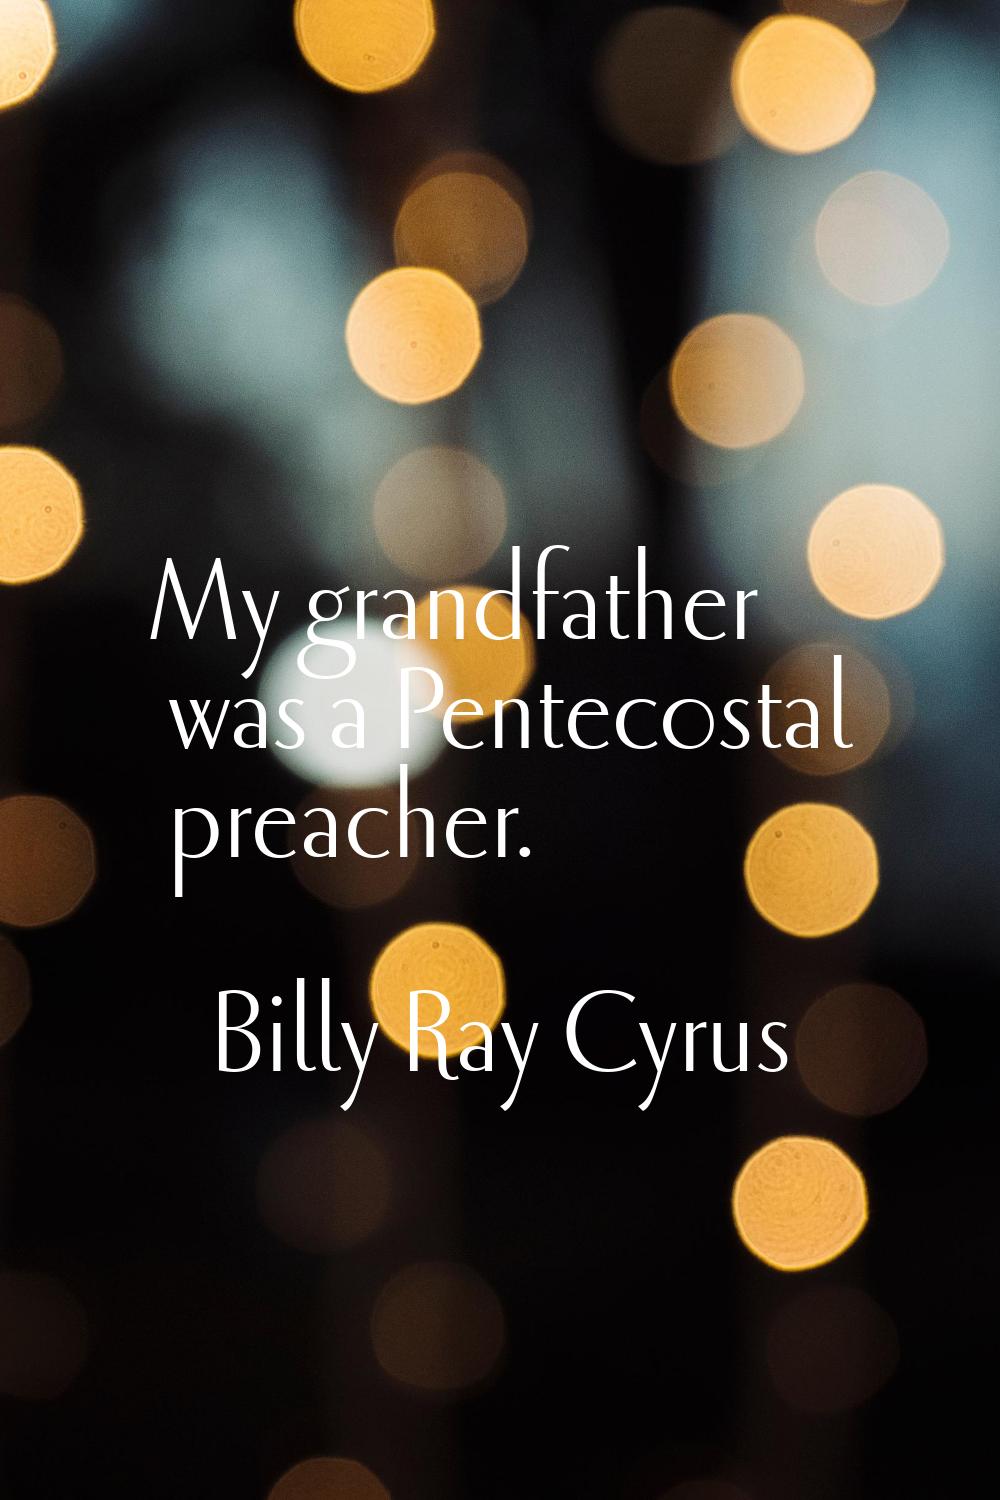 My grandfather was a Pentecostal preacher.